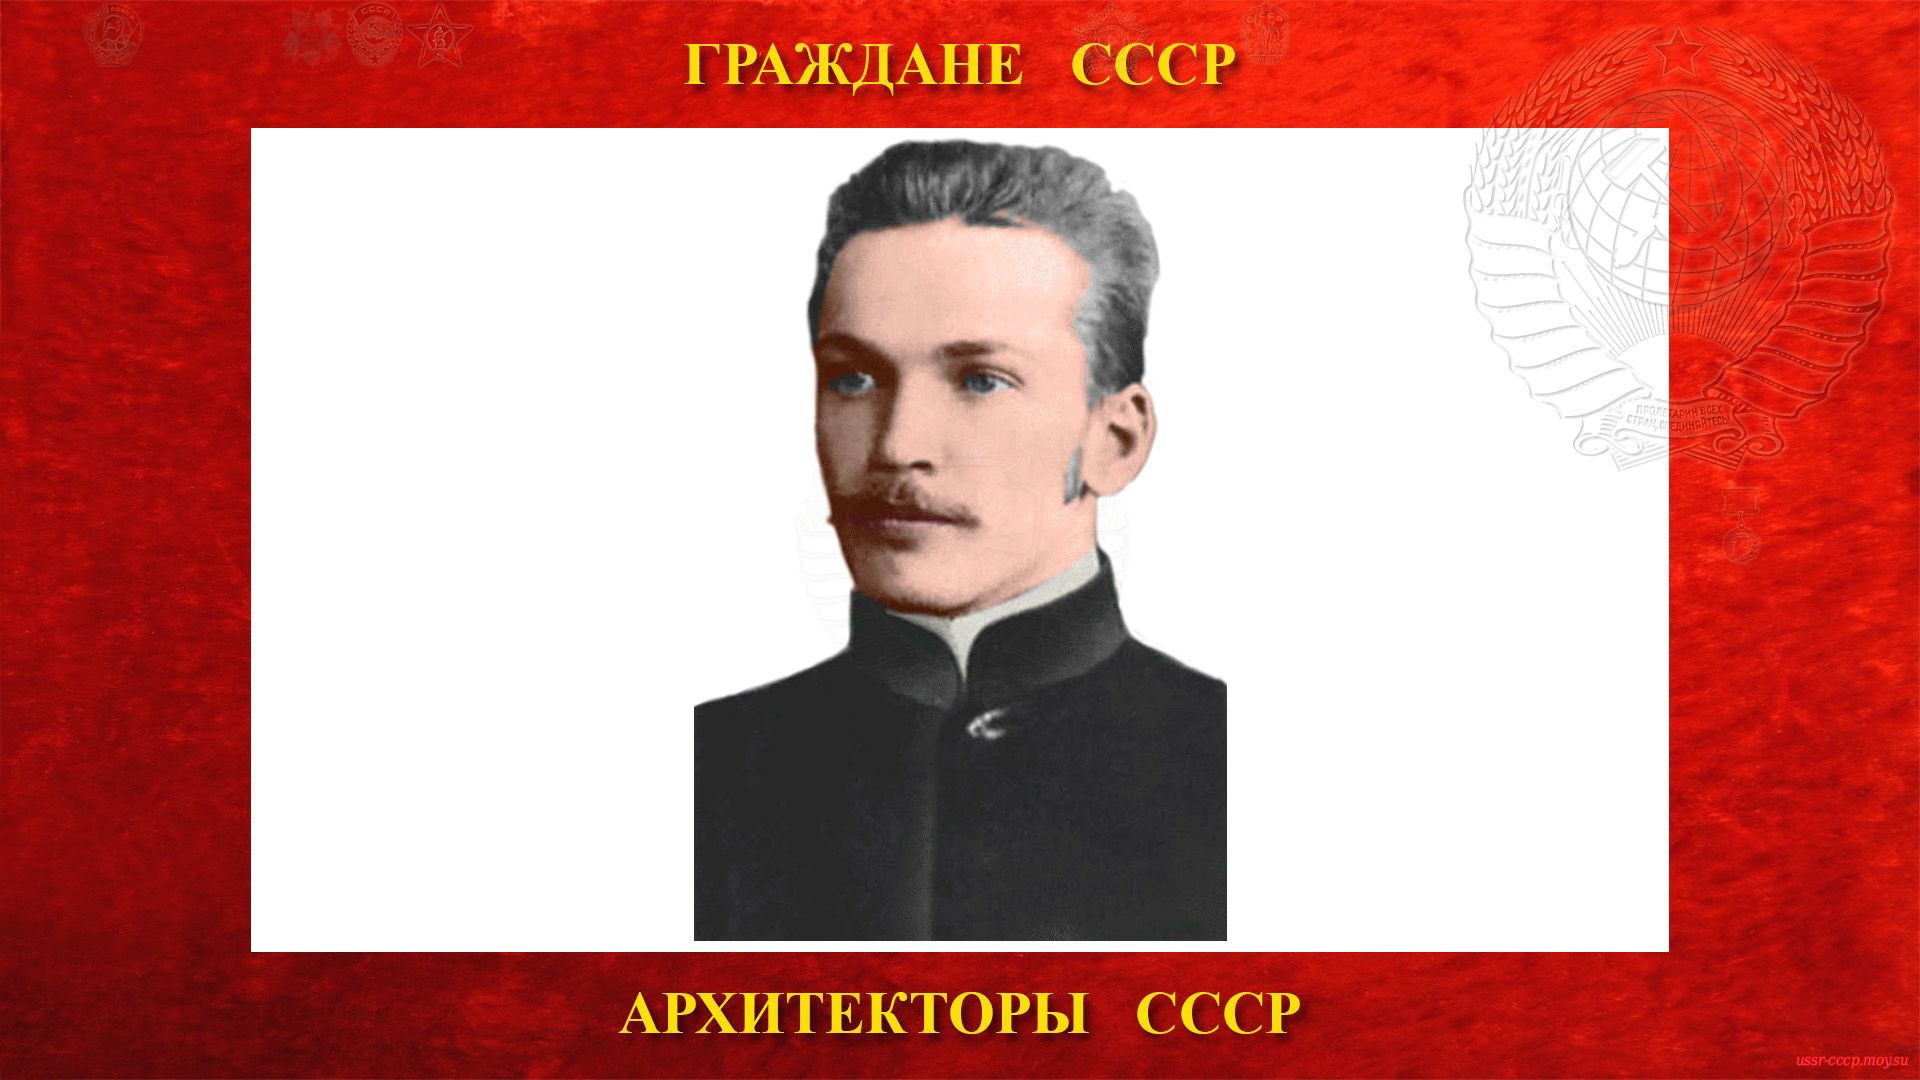 Олтаржевский Вячеслав Константинович (биография)